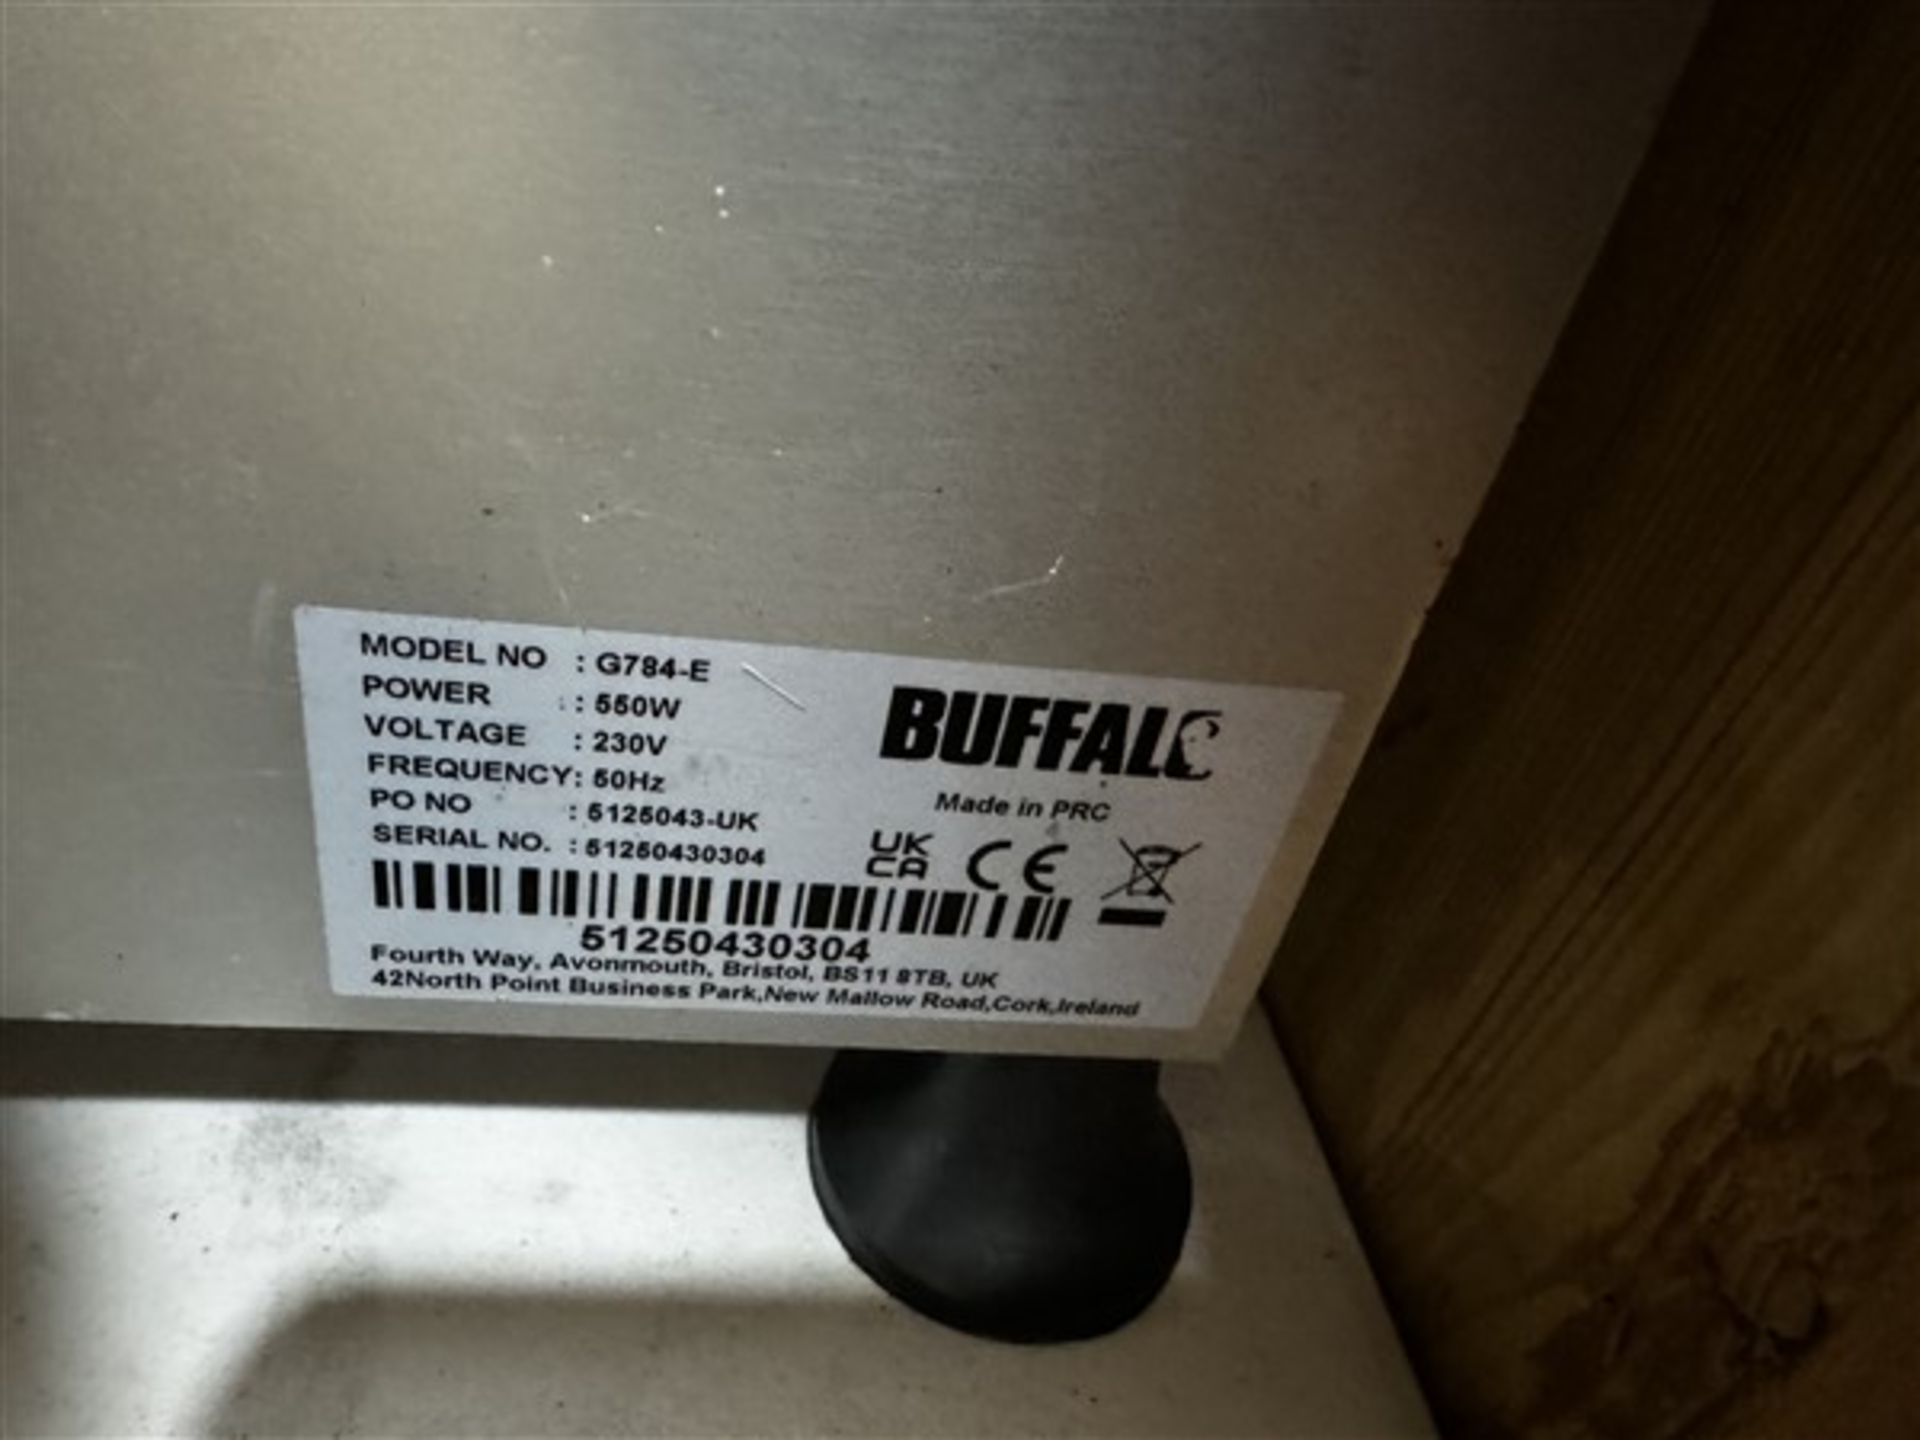 Buffalo electric grater, model G784-E - Image 3 of 4